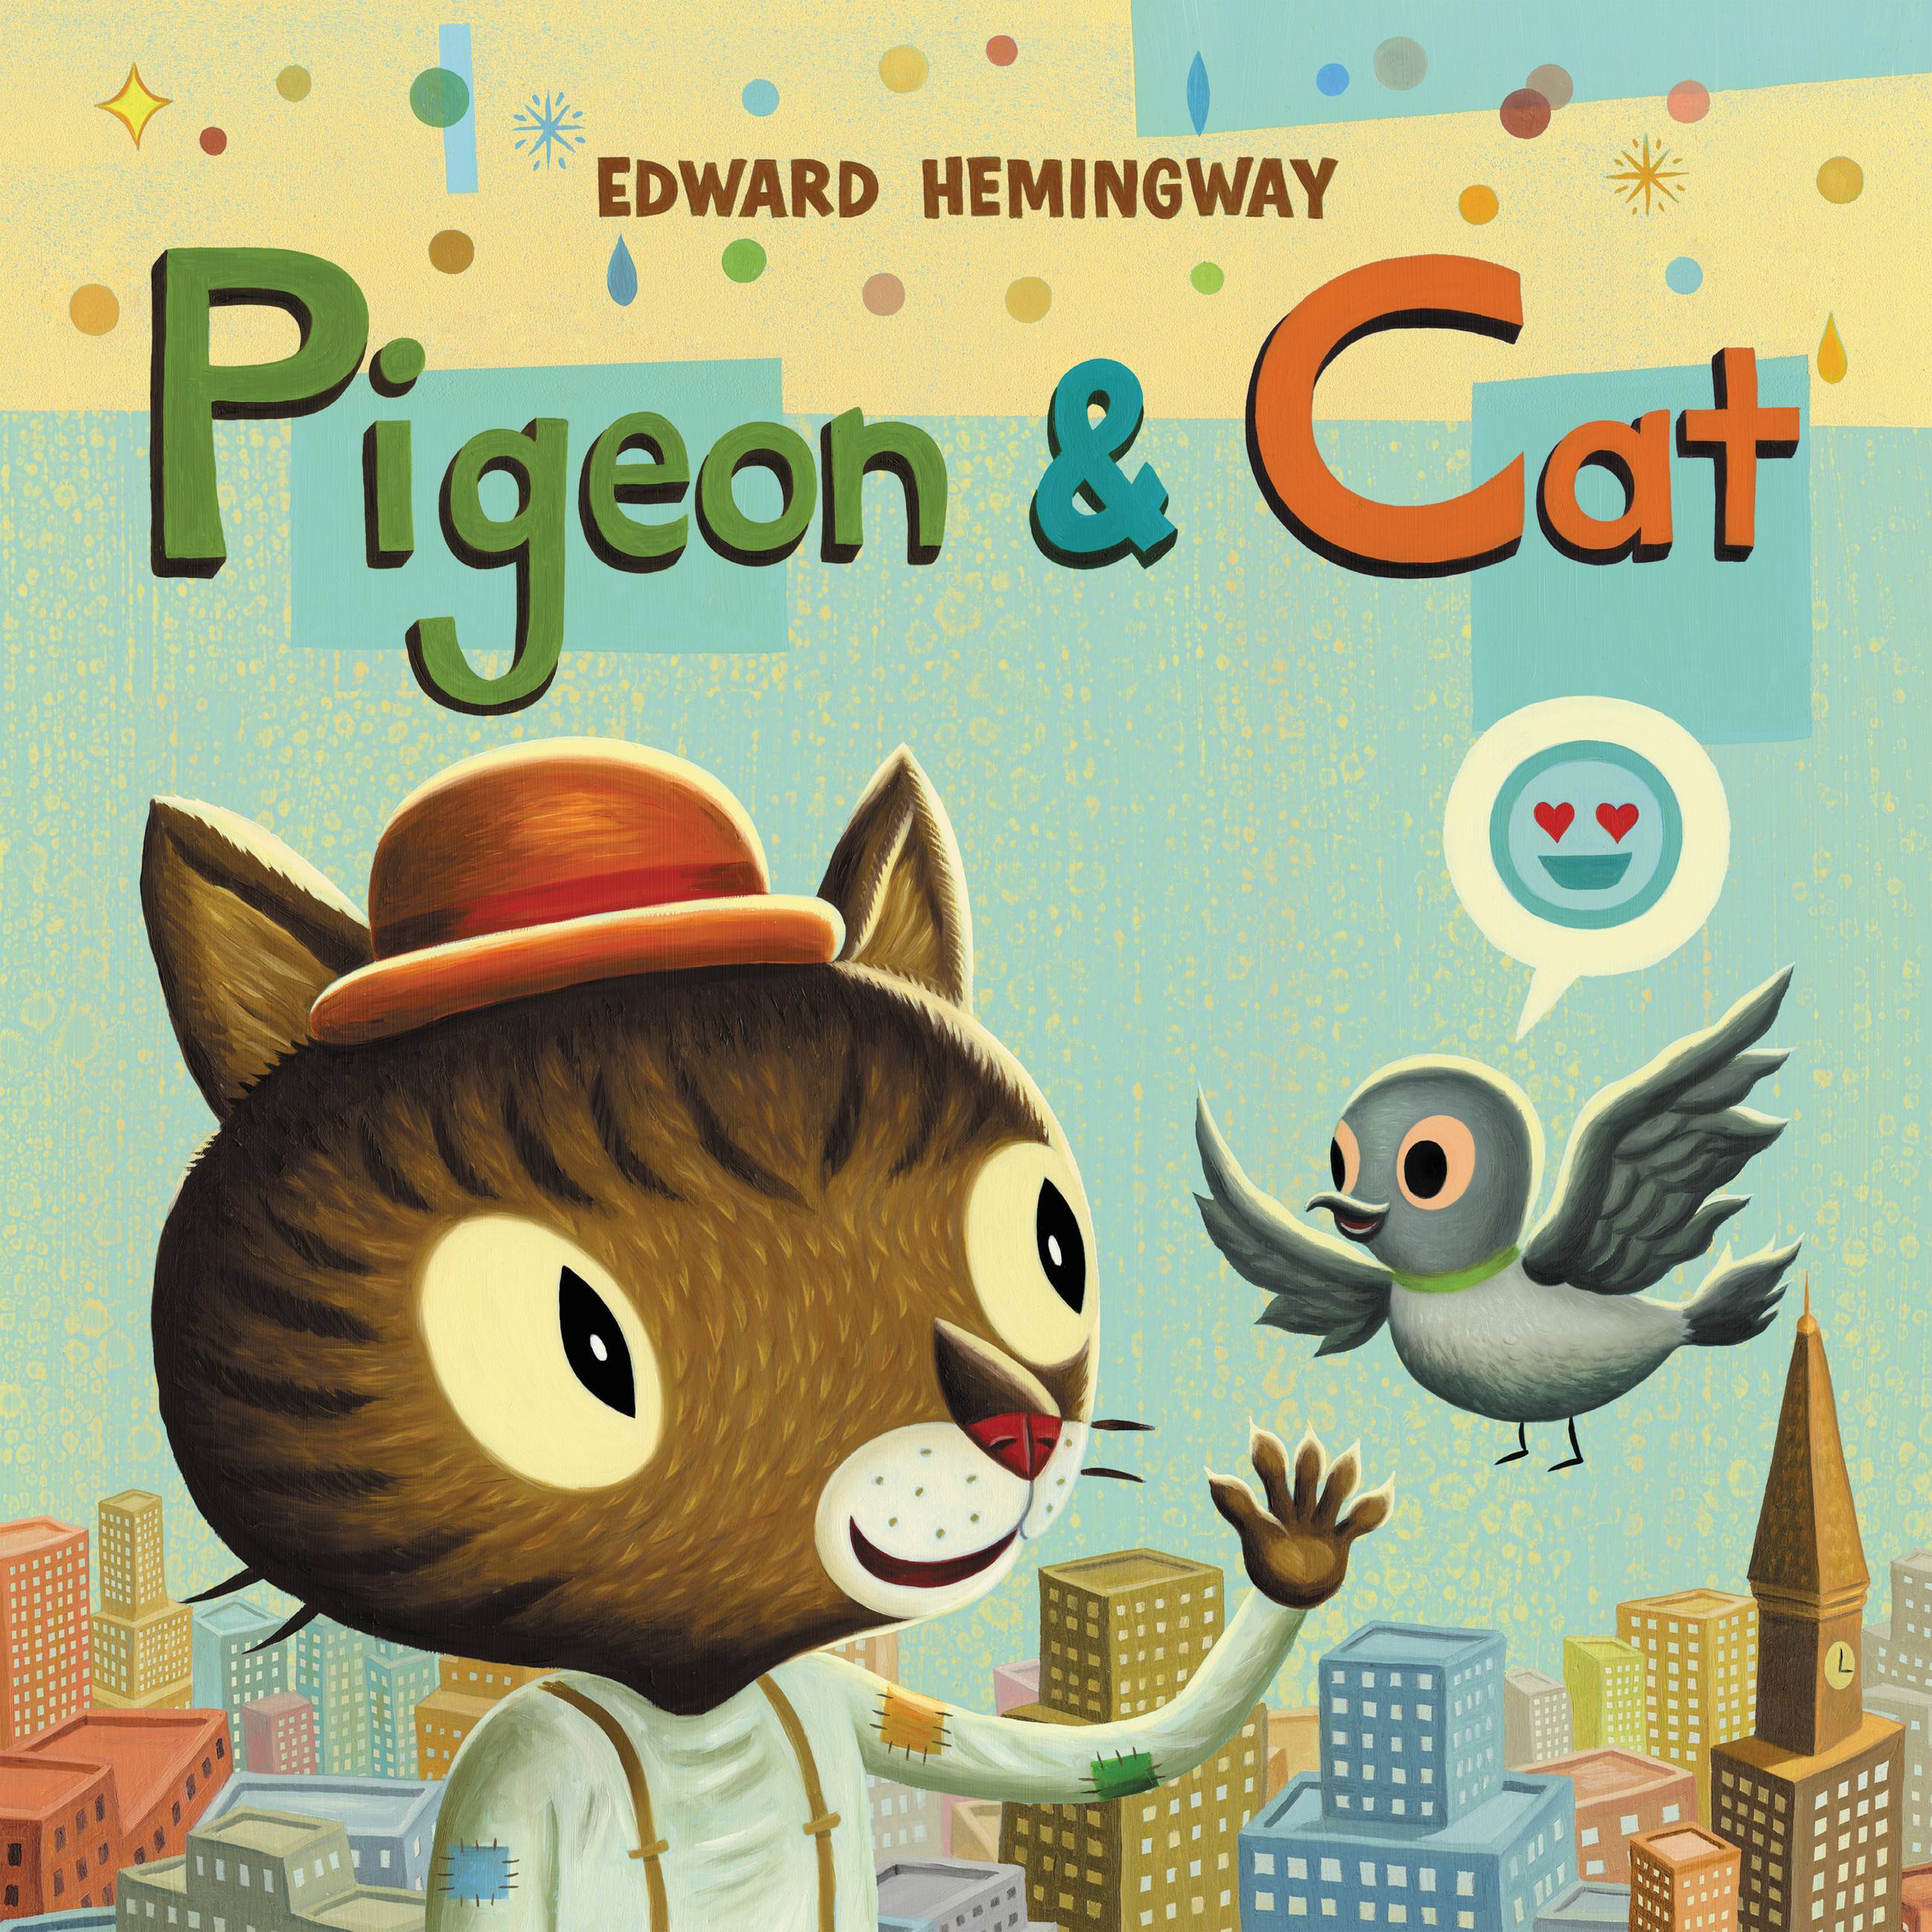 Pigeon & Cat by Edward Hemingway